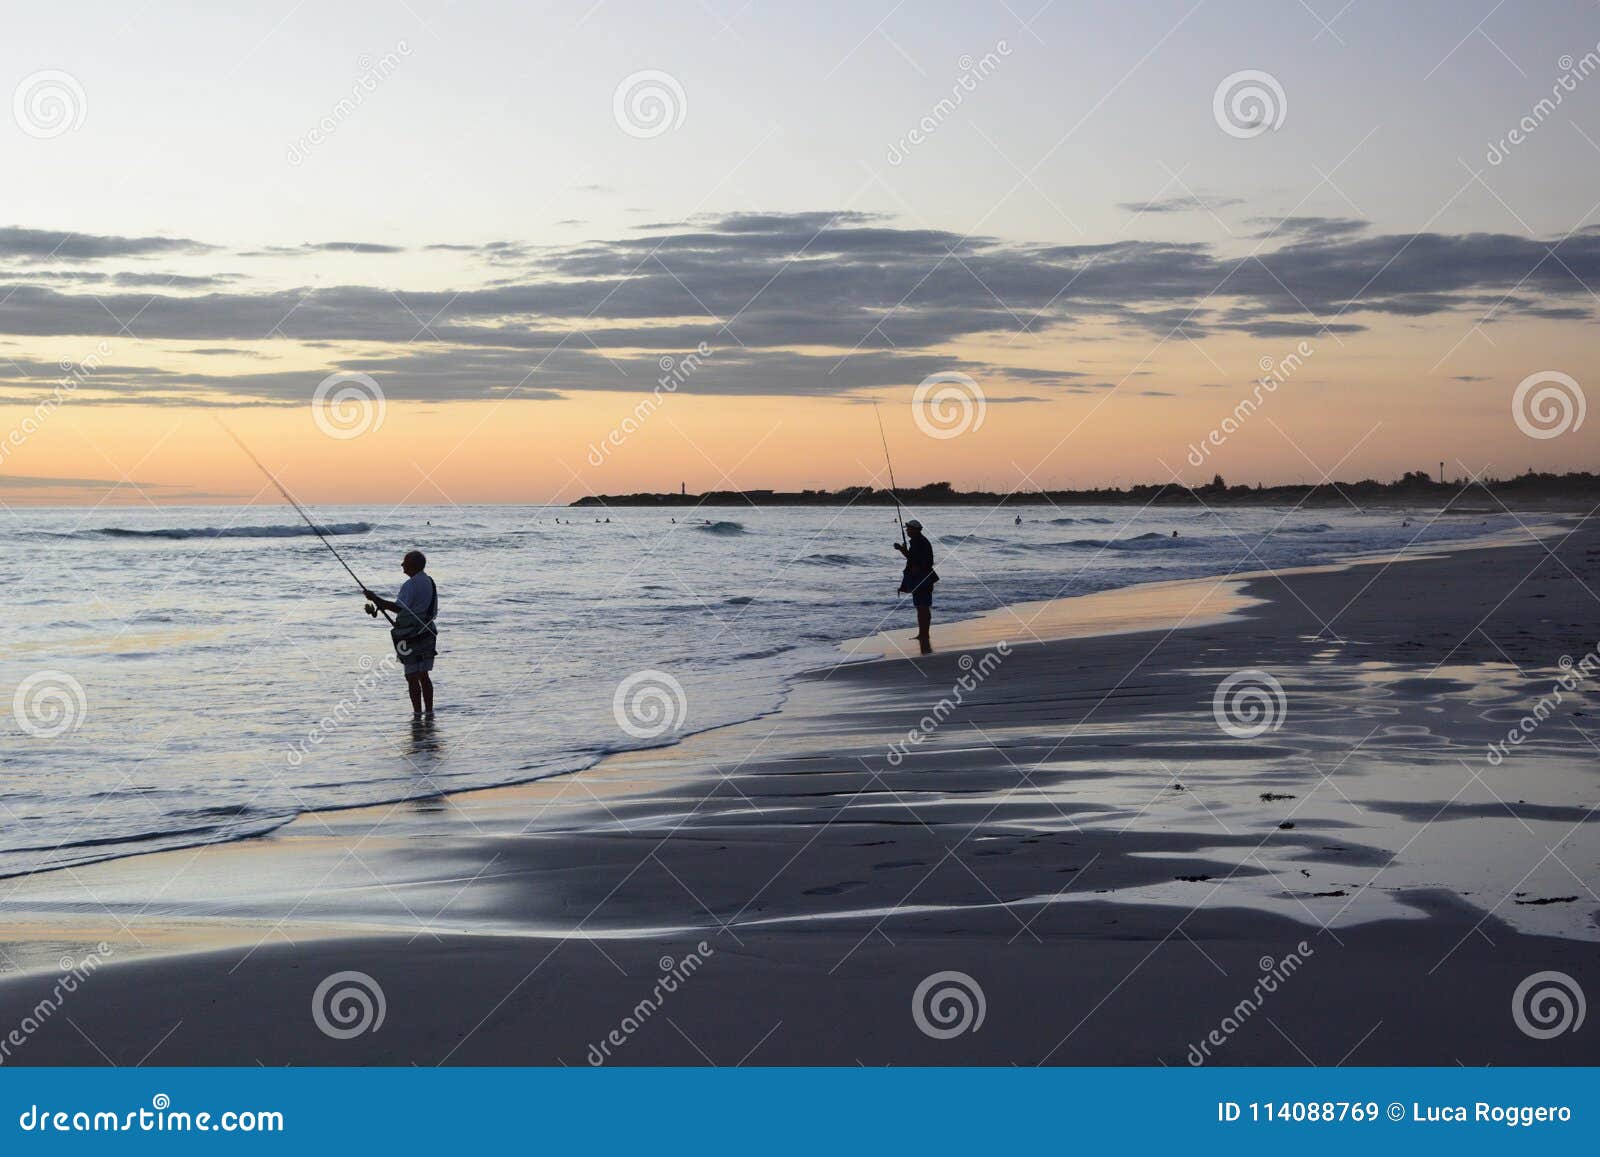 surf fishing rods in Western Australia, Fishing